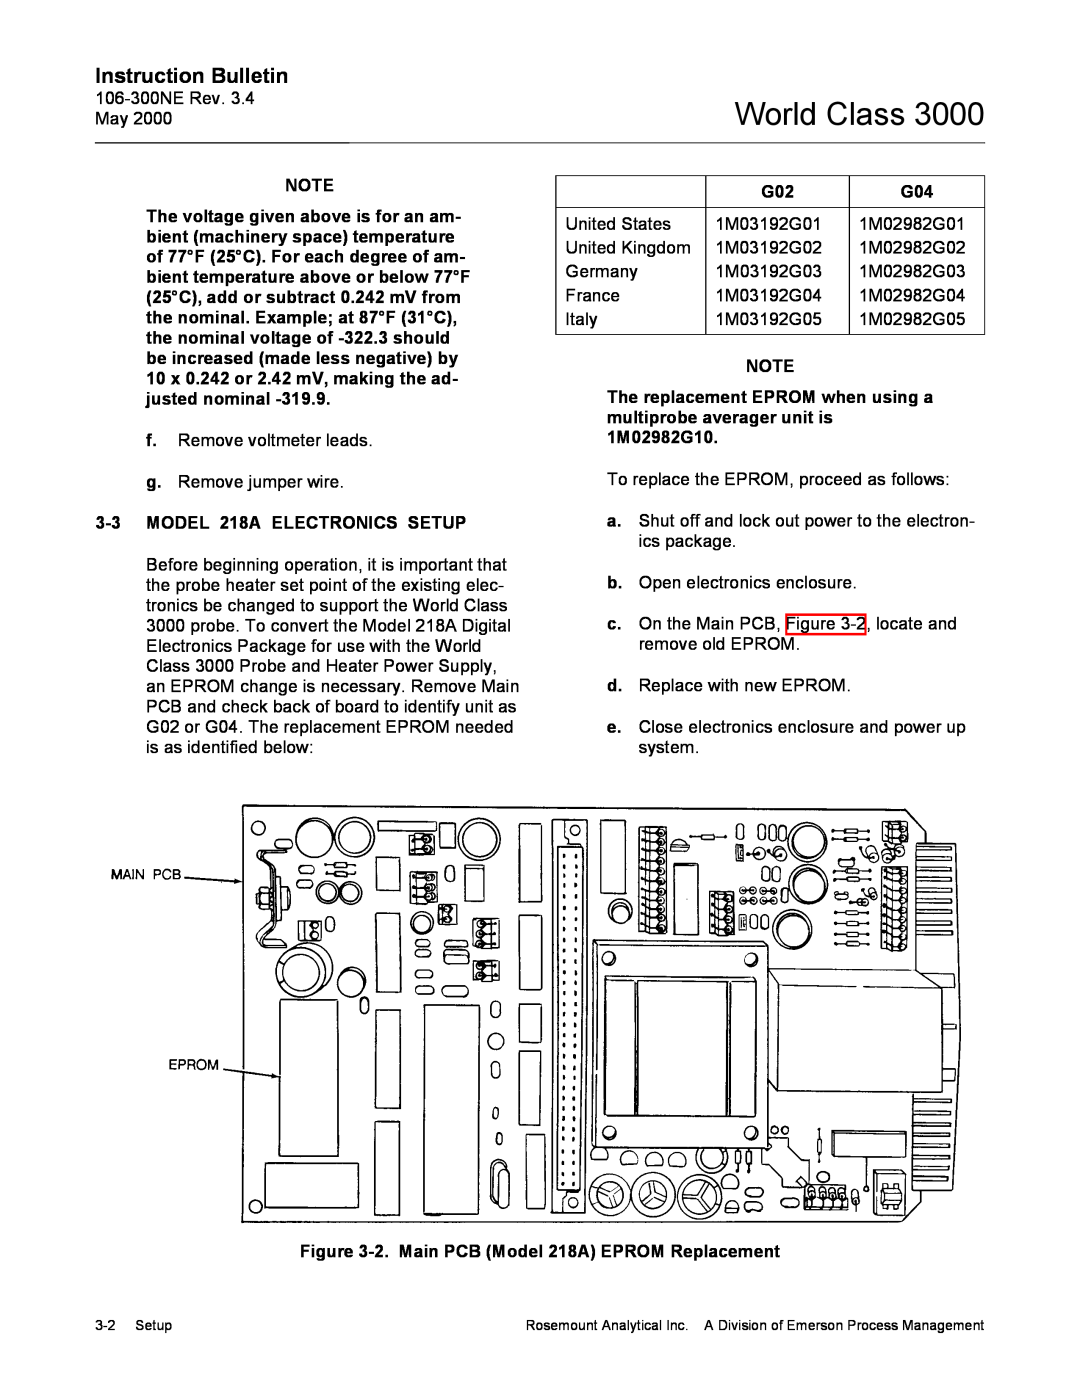 Emerson 3000 manual Instruction Bulletin, 3-3MODEL 218A ELECTRONICS SETUP 